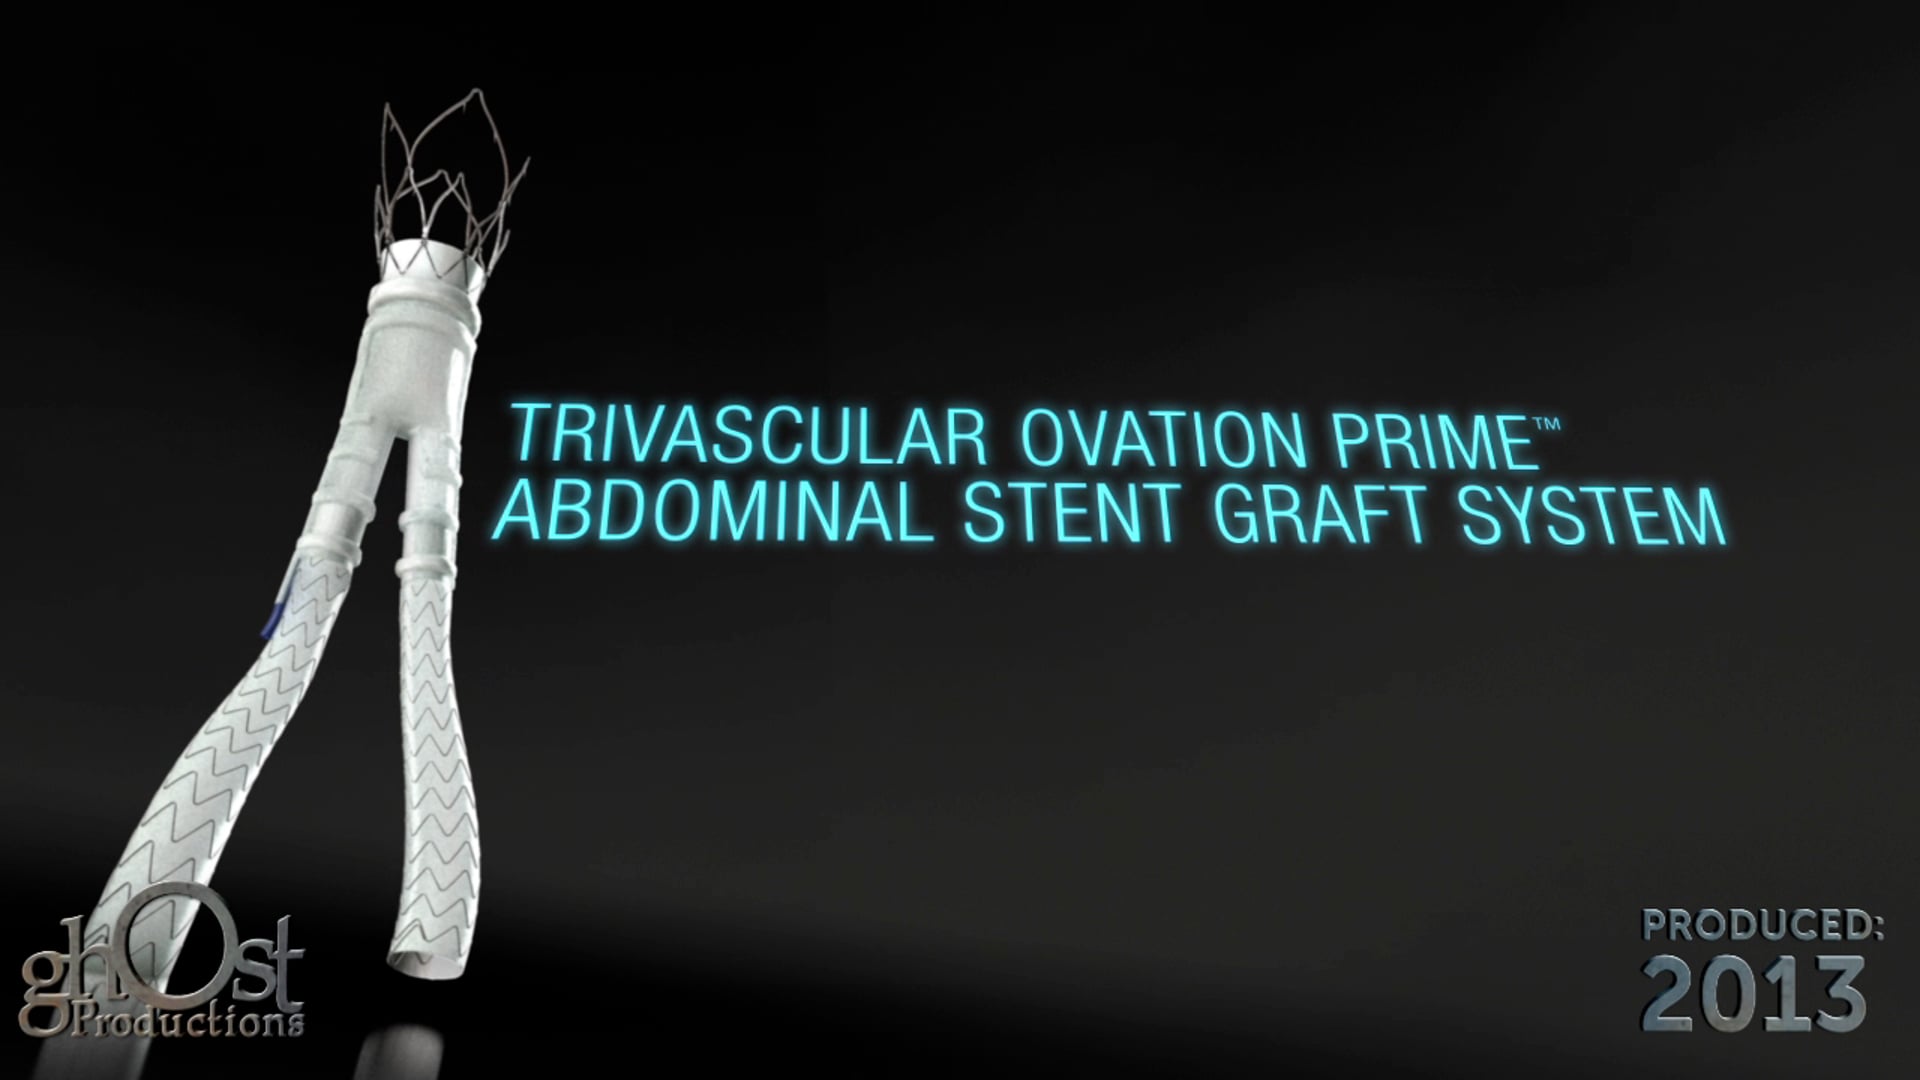 TriVascular Ovation Prime